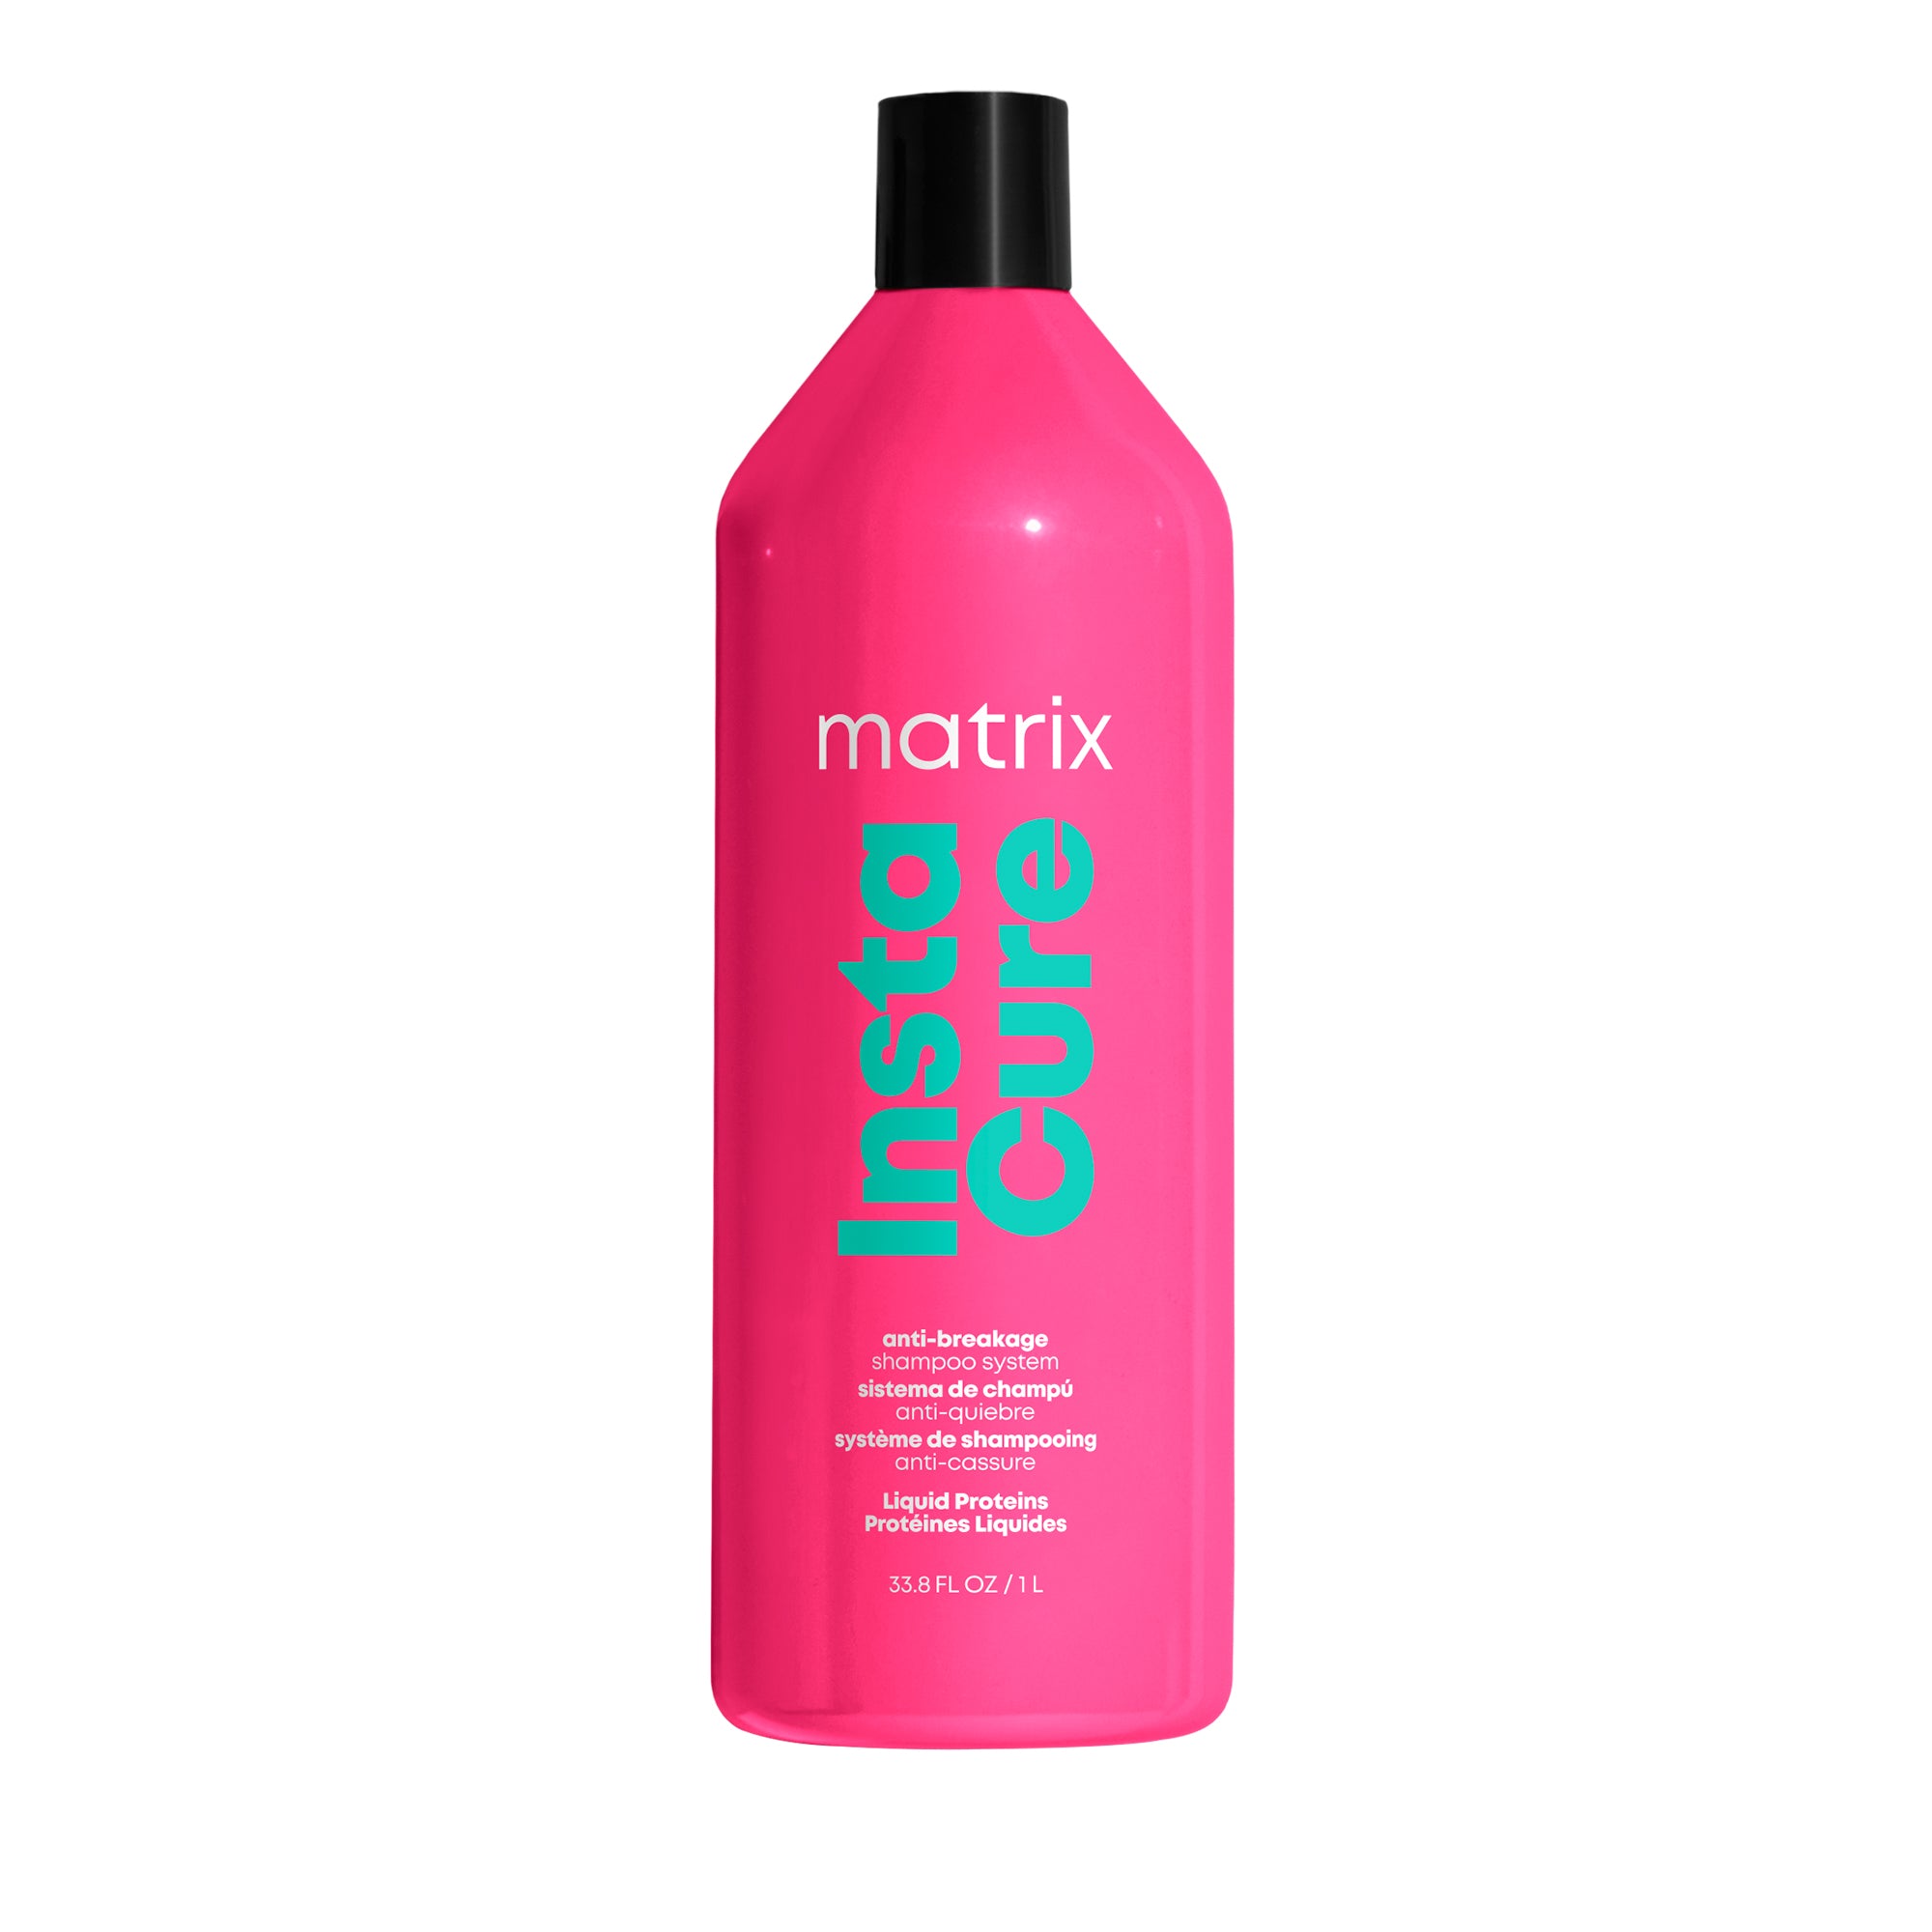 Matrix InstaCure Shampoo 33oz / 33.OZ